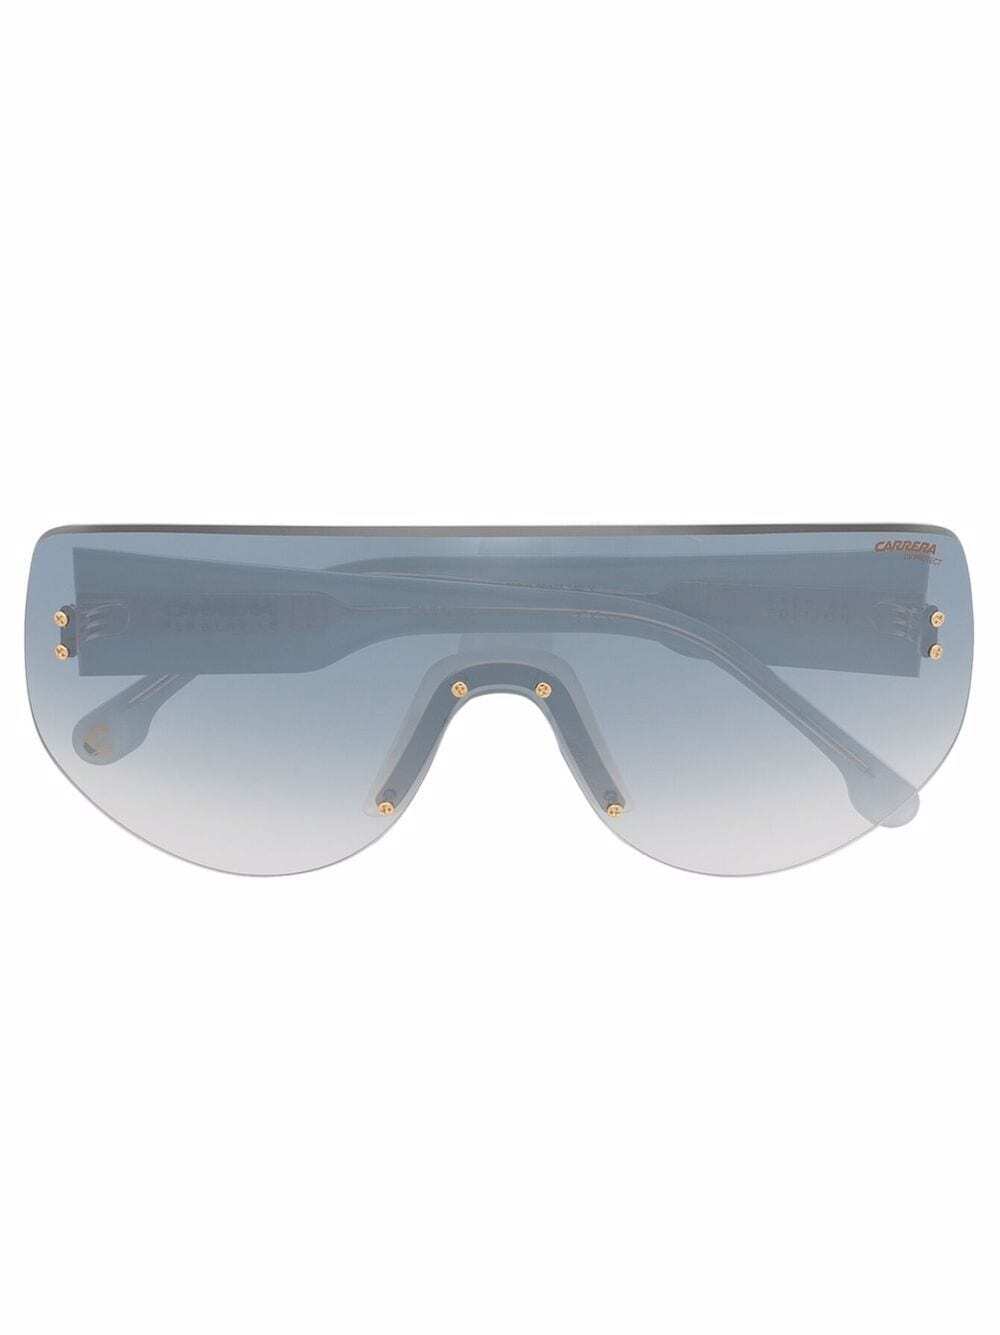 Carrera oversized sunglasses - Blue